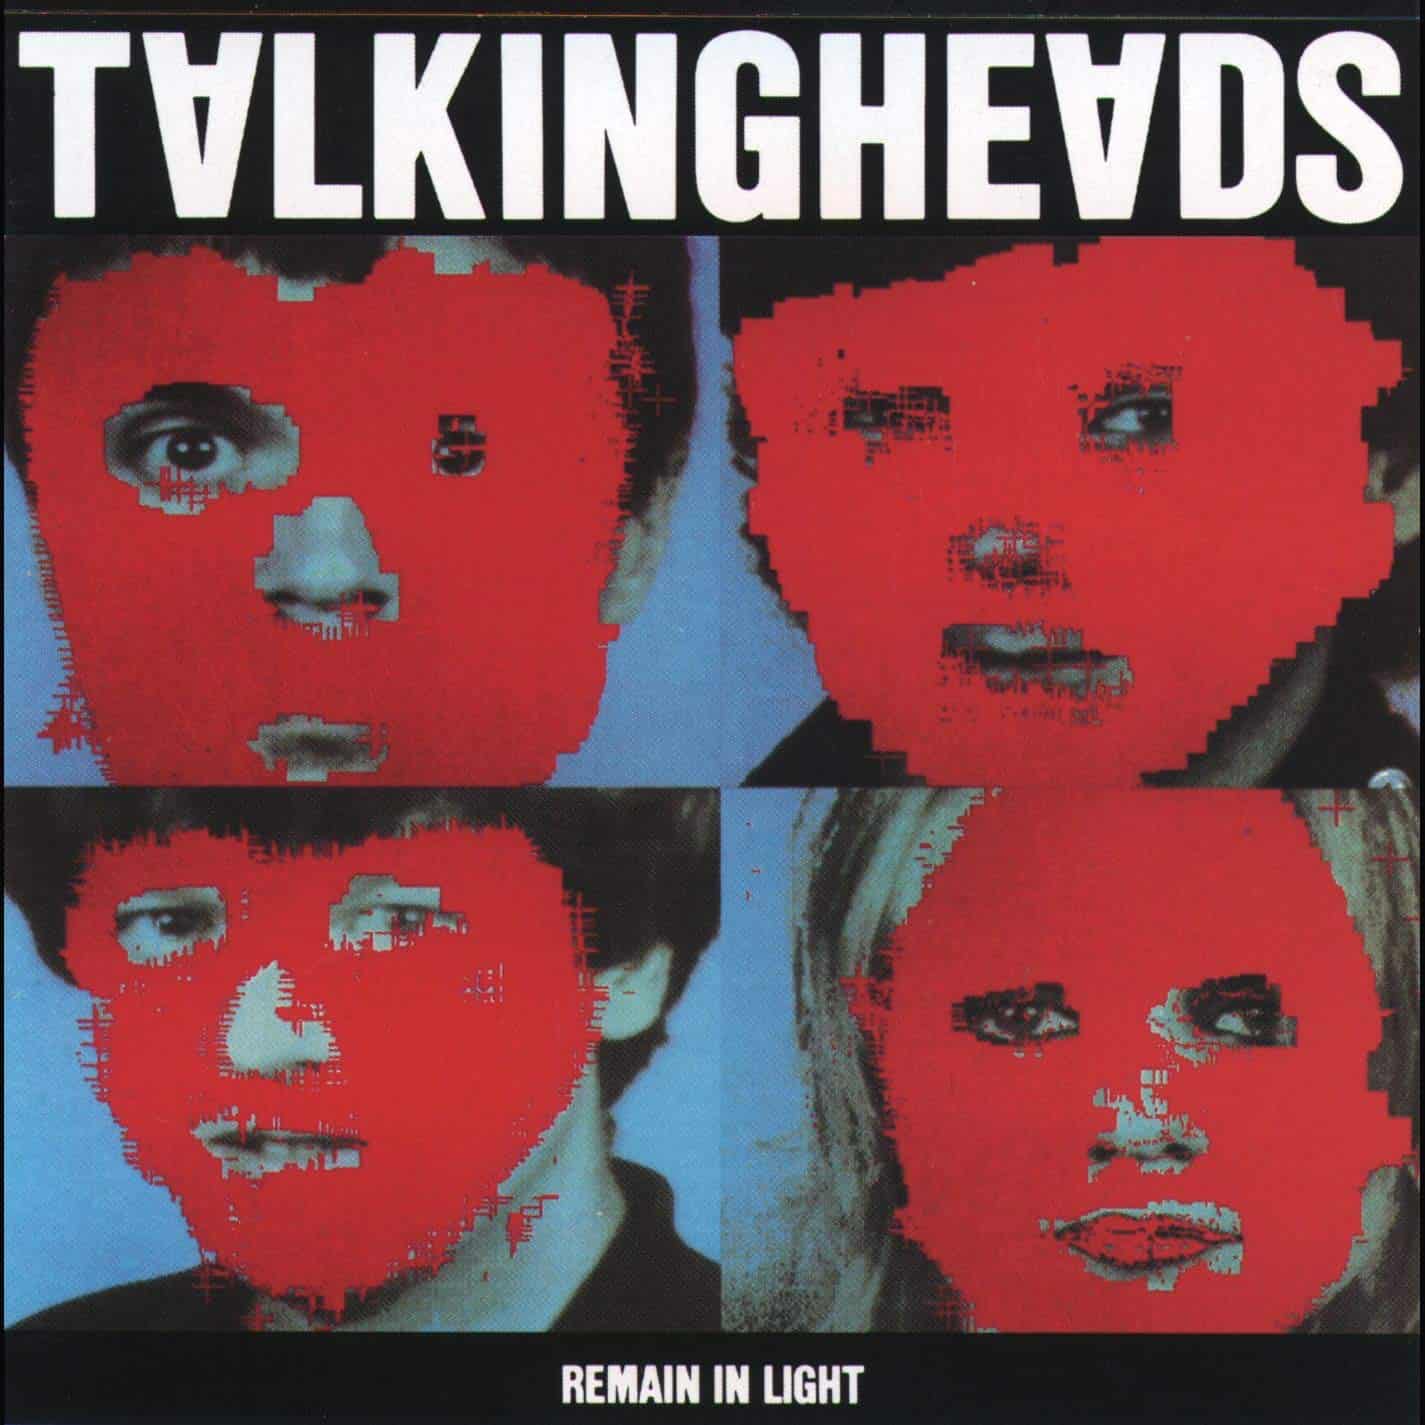 Talking-Heads-Remain-In-Light-vinyl-record-album-front